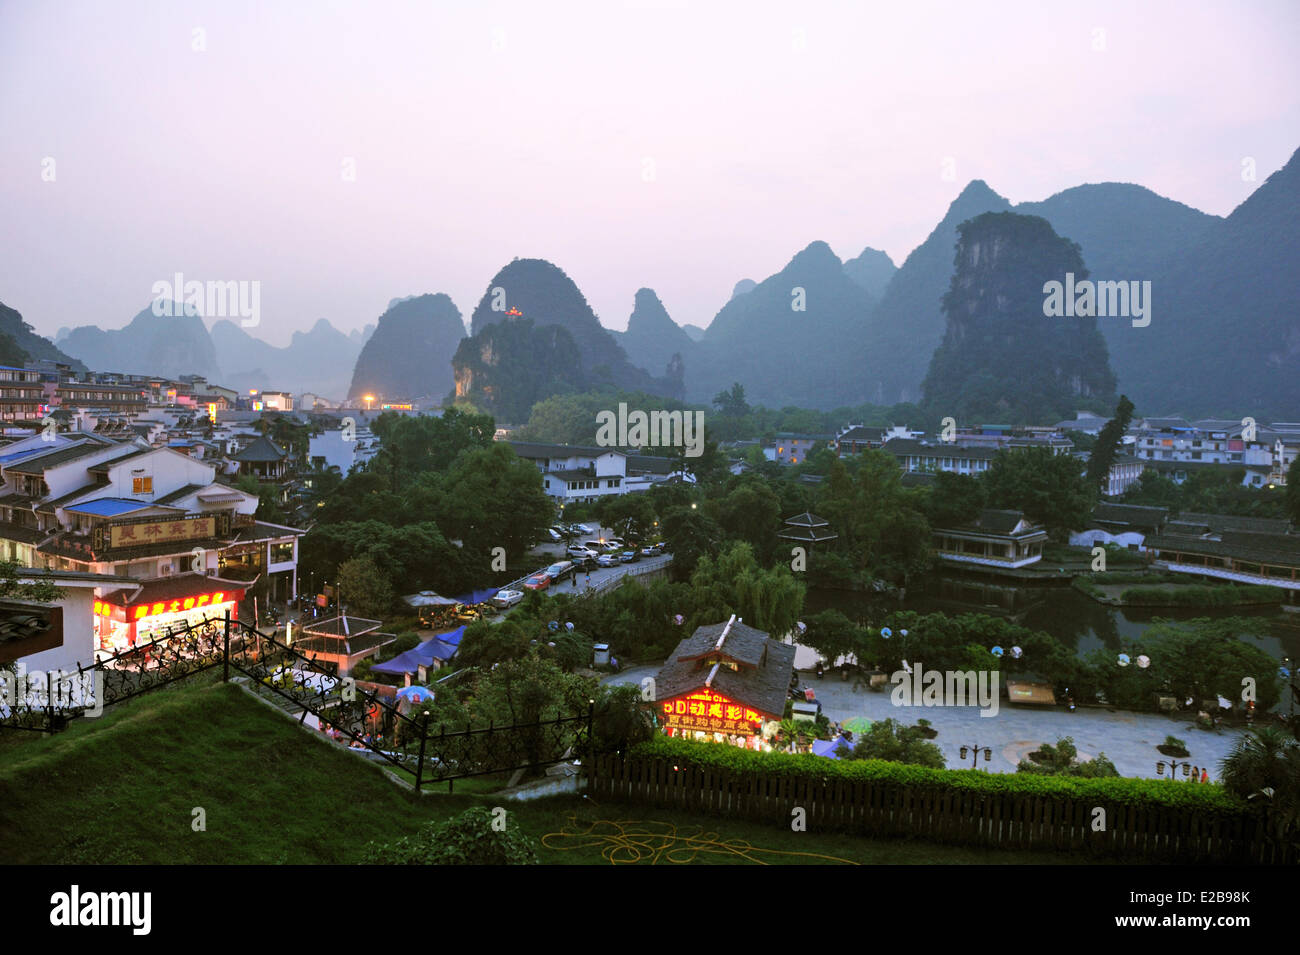 China, province of Guangxi, Guilin, Yangshuo, Karst mountain landscape Stock Photo